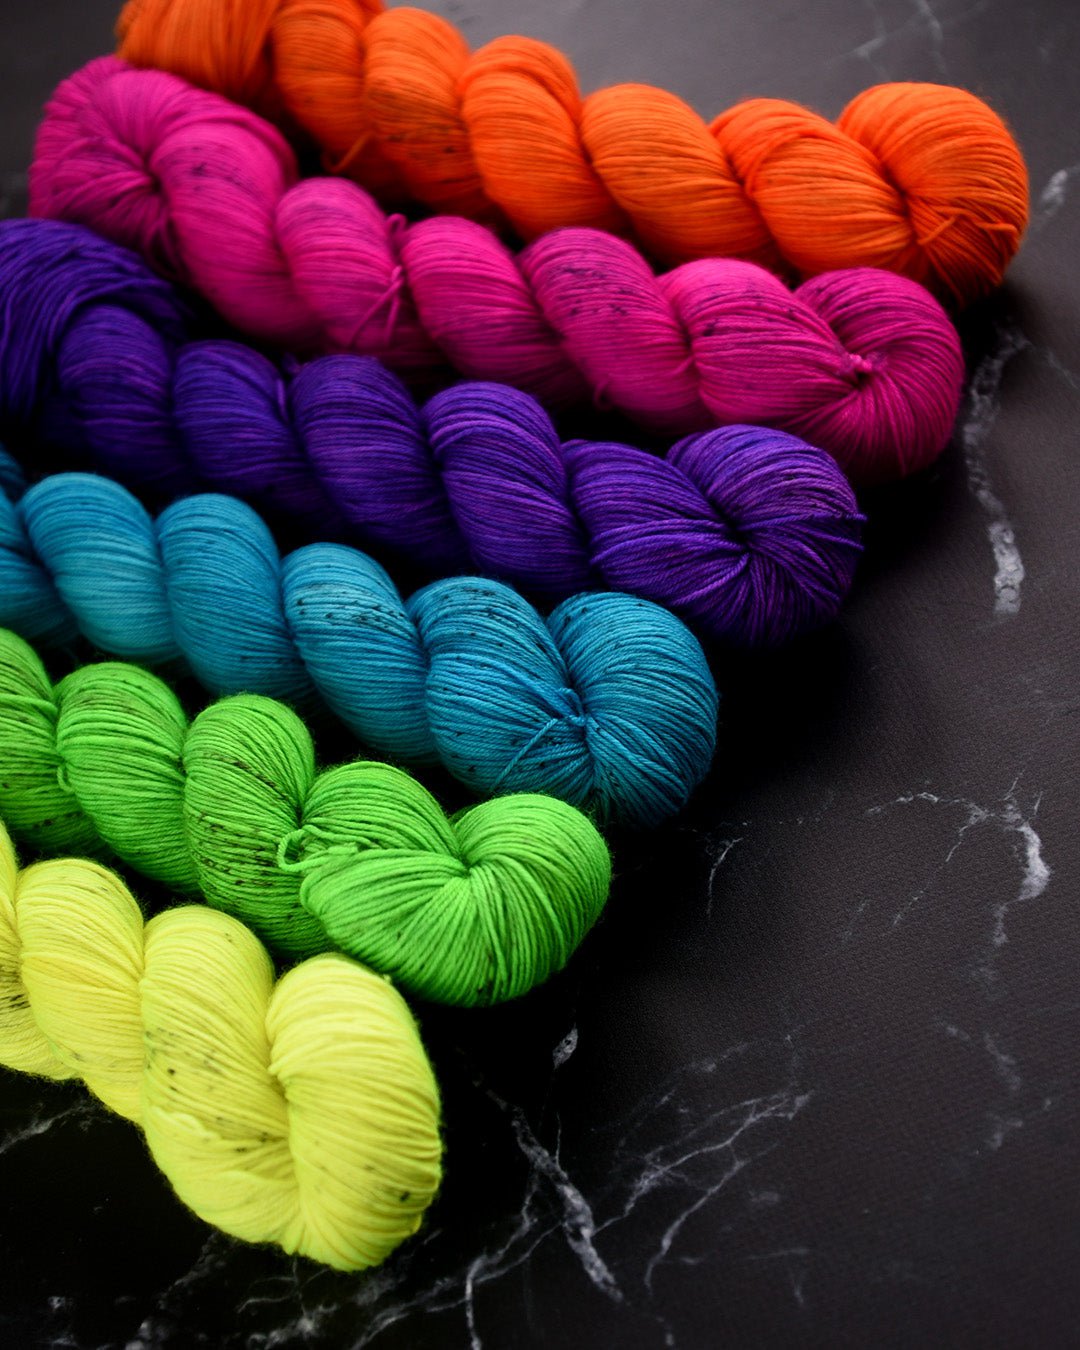 Electric orange yarn, neon orange yarn, neon yarn with speckles